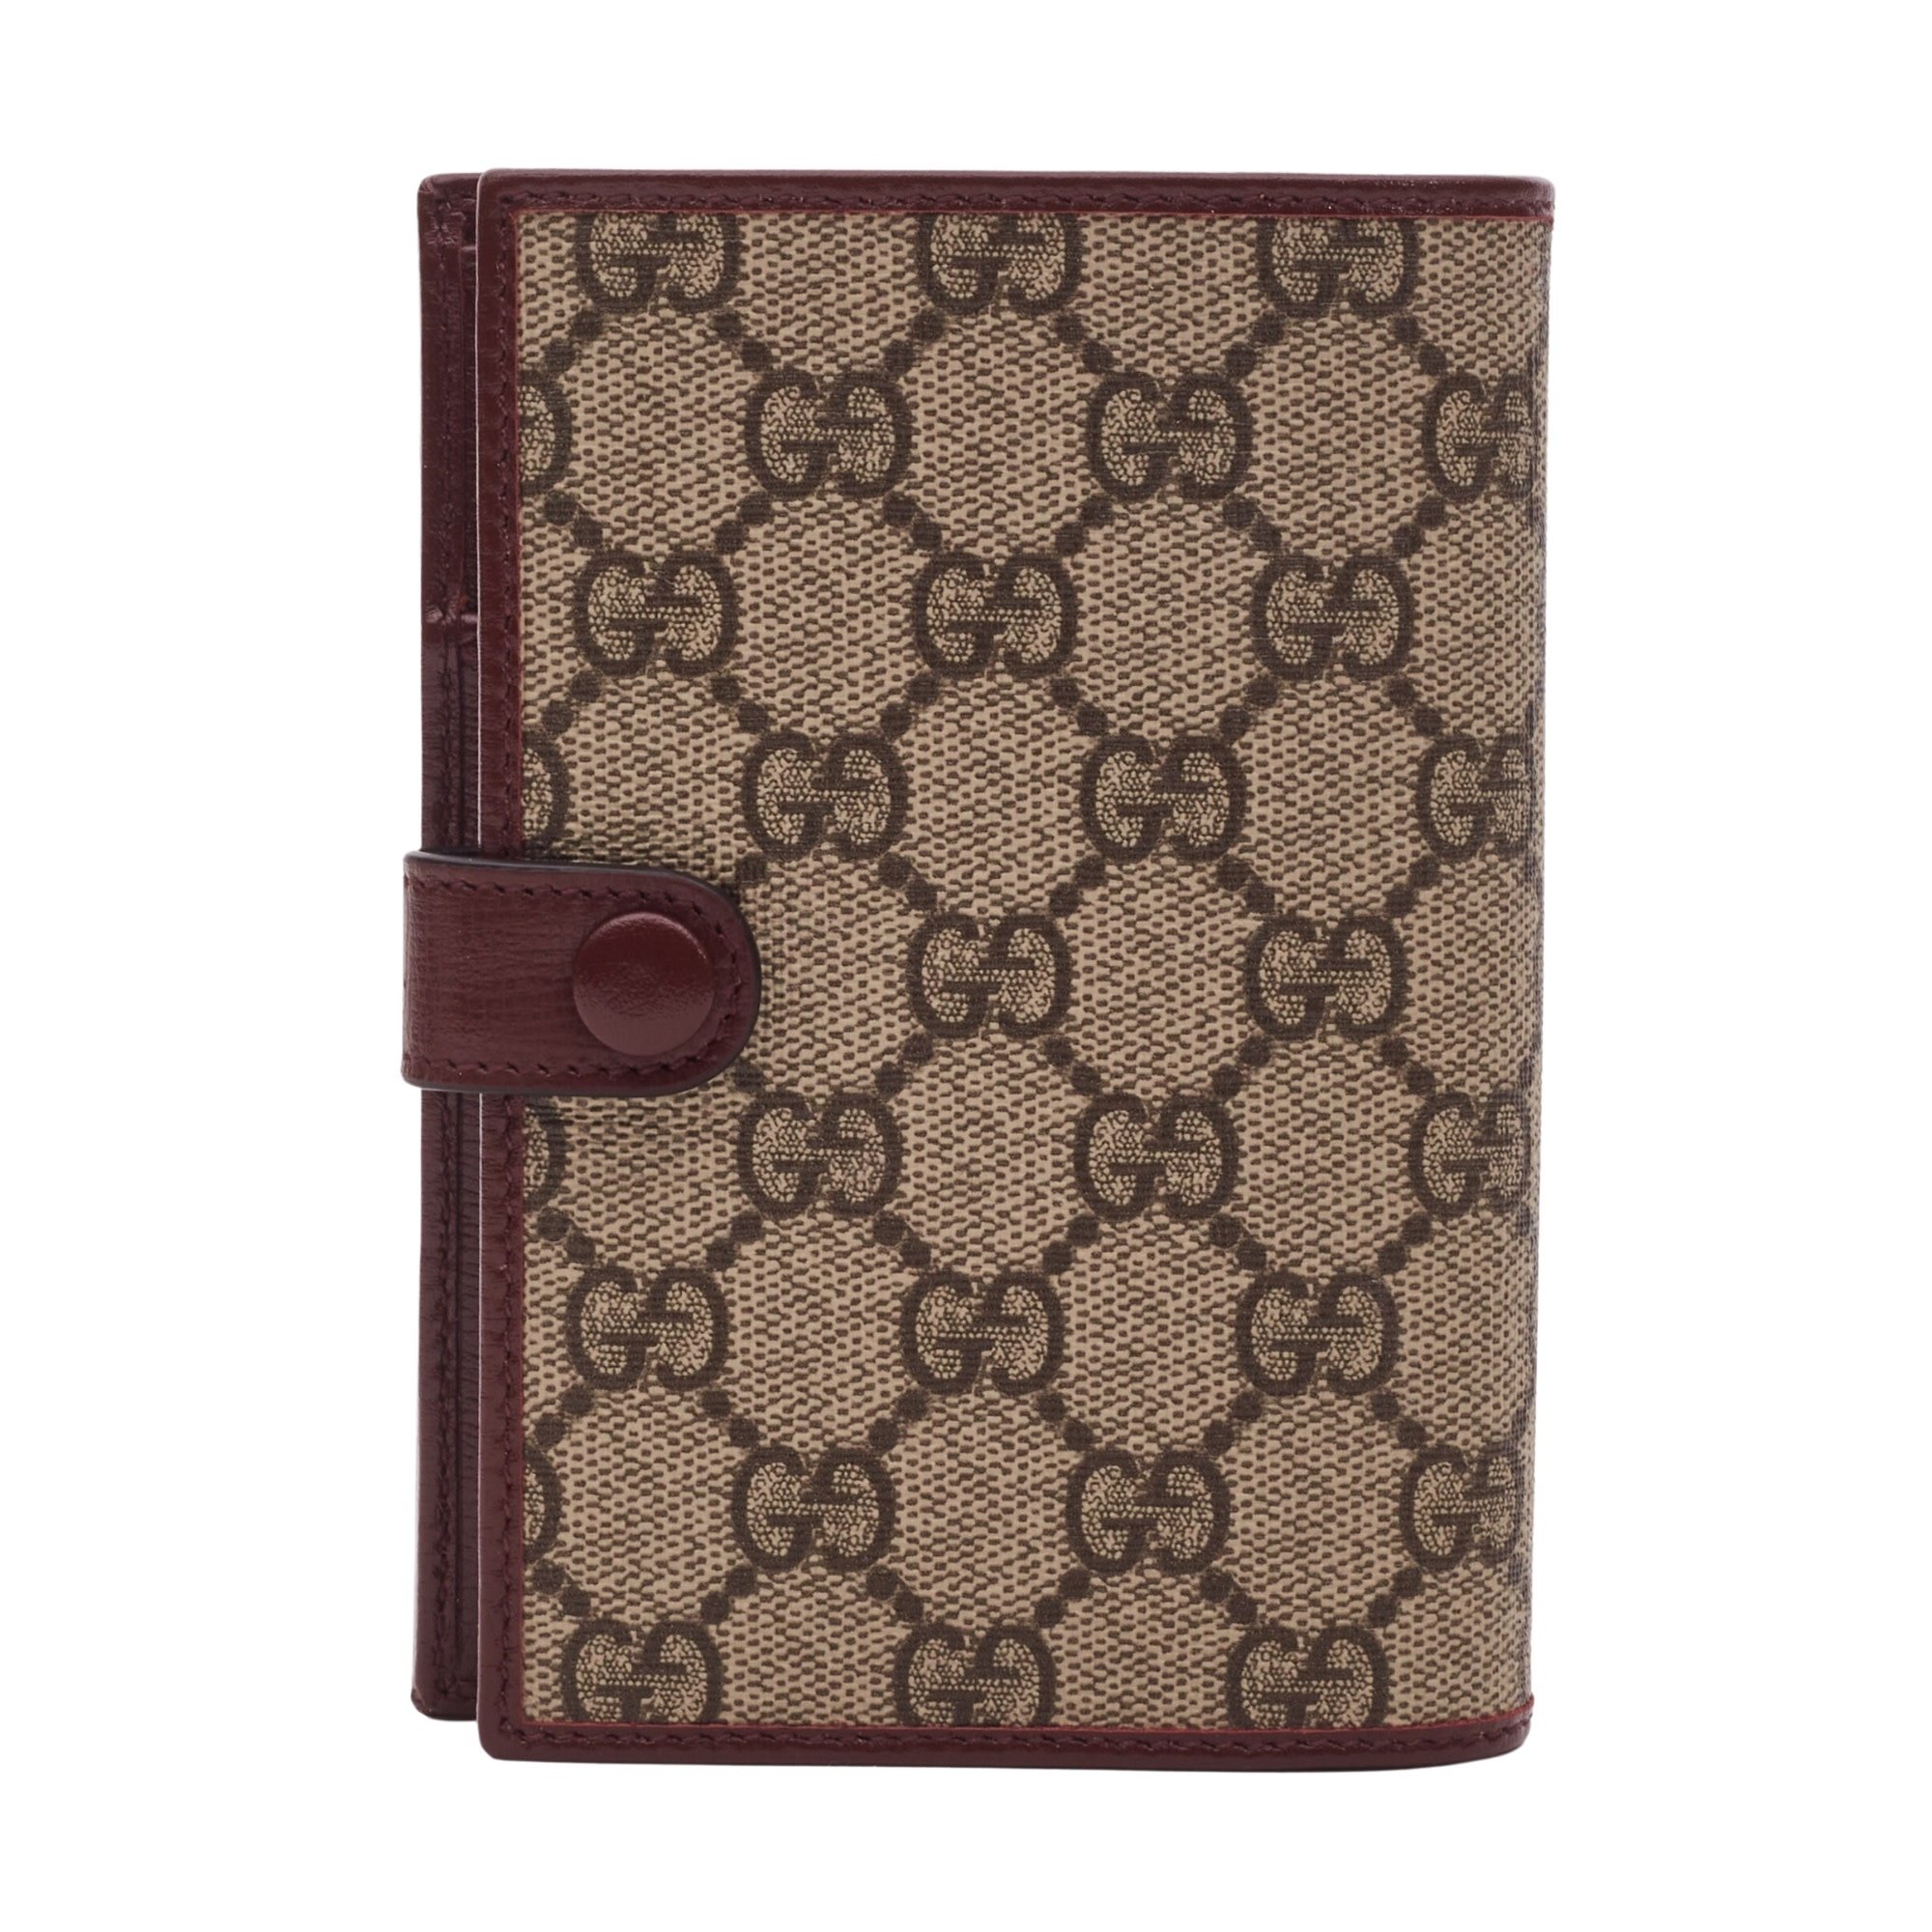 Gucci 724562 Monogram Canvas Leather Passport Cover